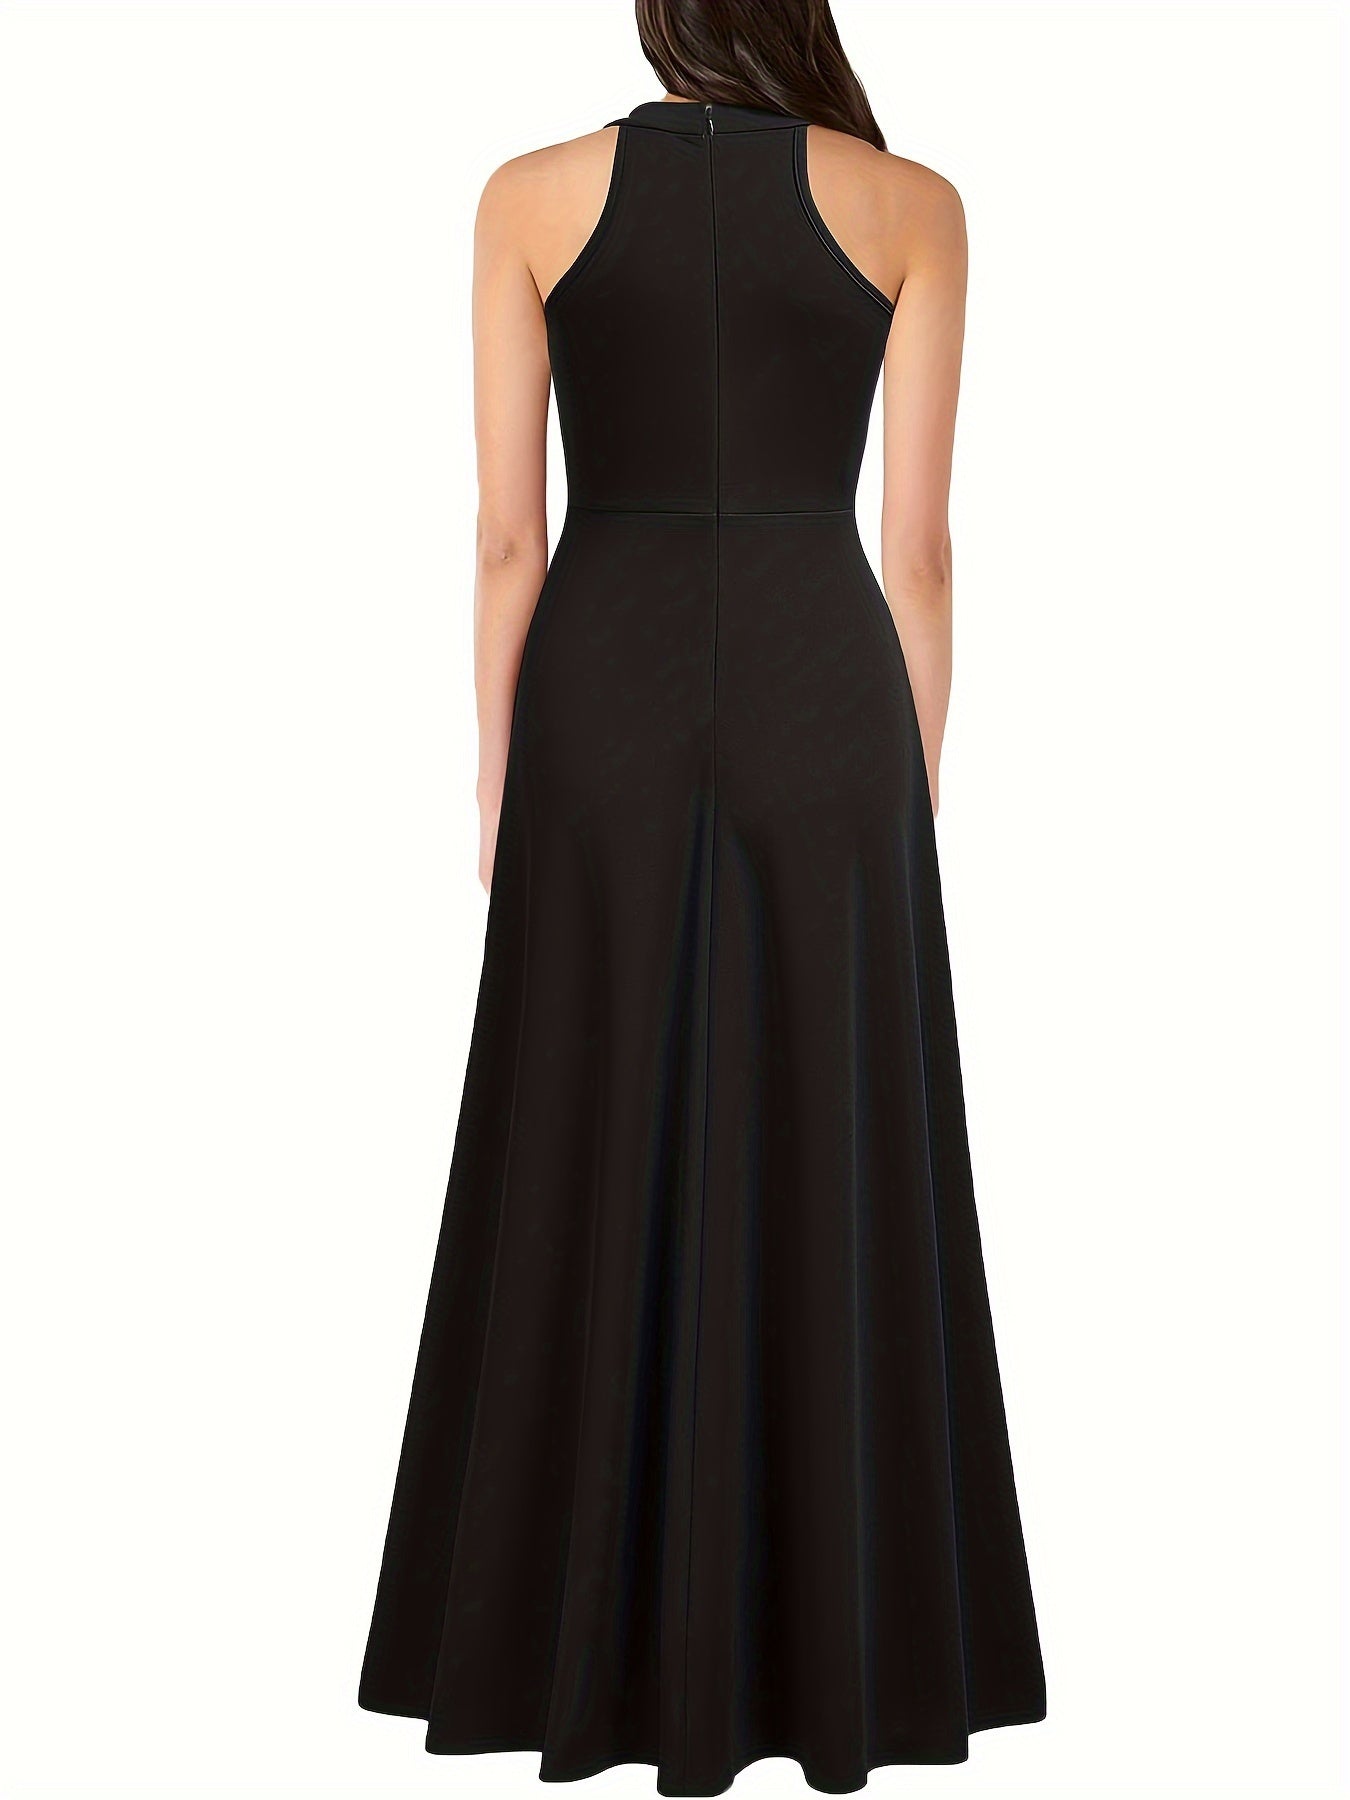 Split Thigh Mock Neck Dress, Elegant Sleeveless Solid Maxi Dress, Women's Clothing